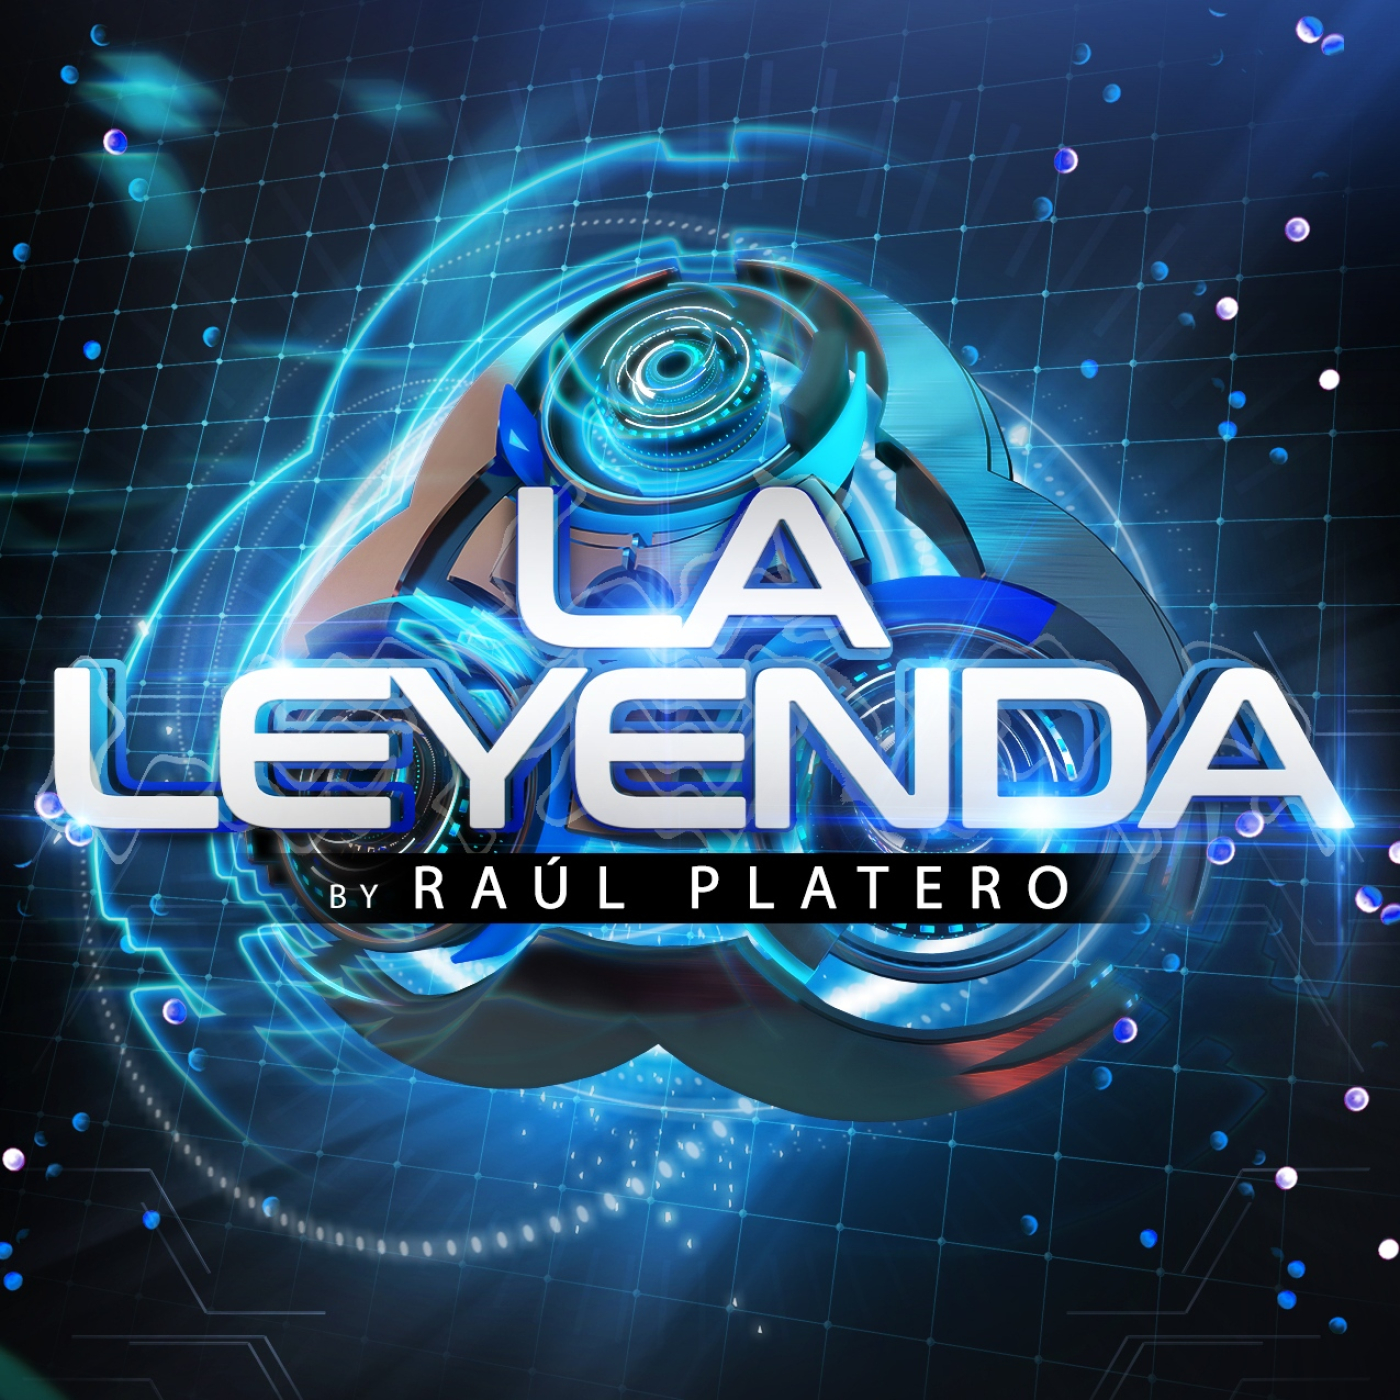 LA LEYENDA by RAUL PLATERO 2022 (Miércoles 09 Febrero)